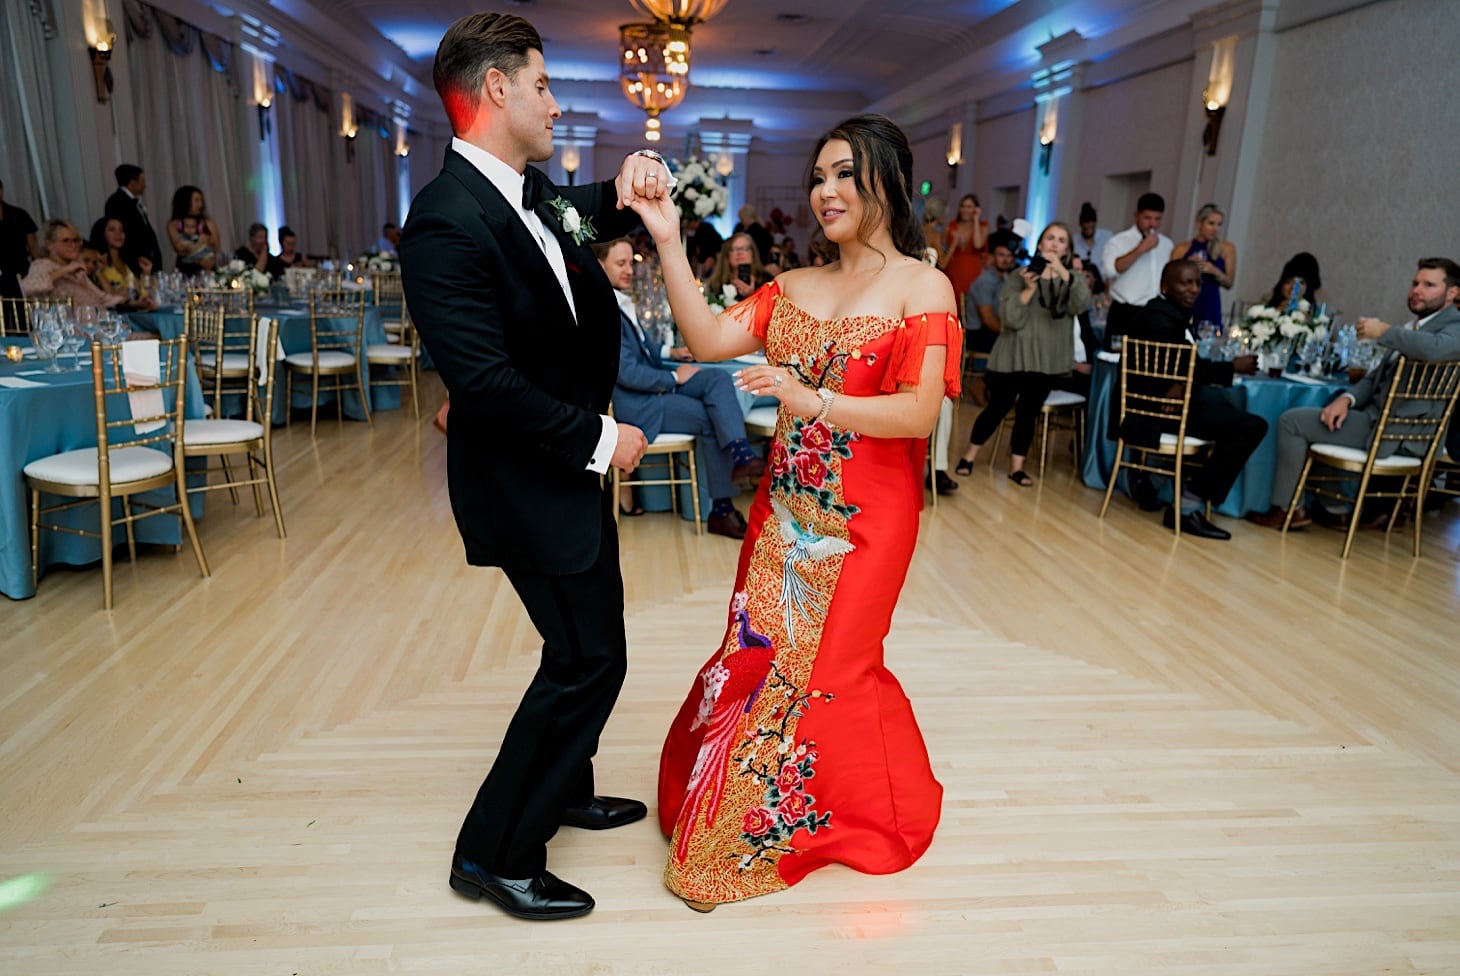 75 dancing at hotel fort des moines wedding reception